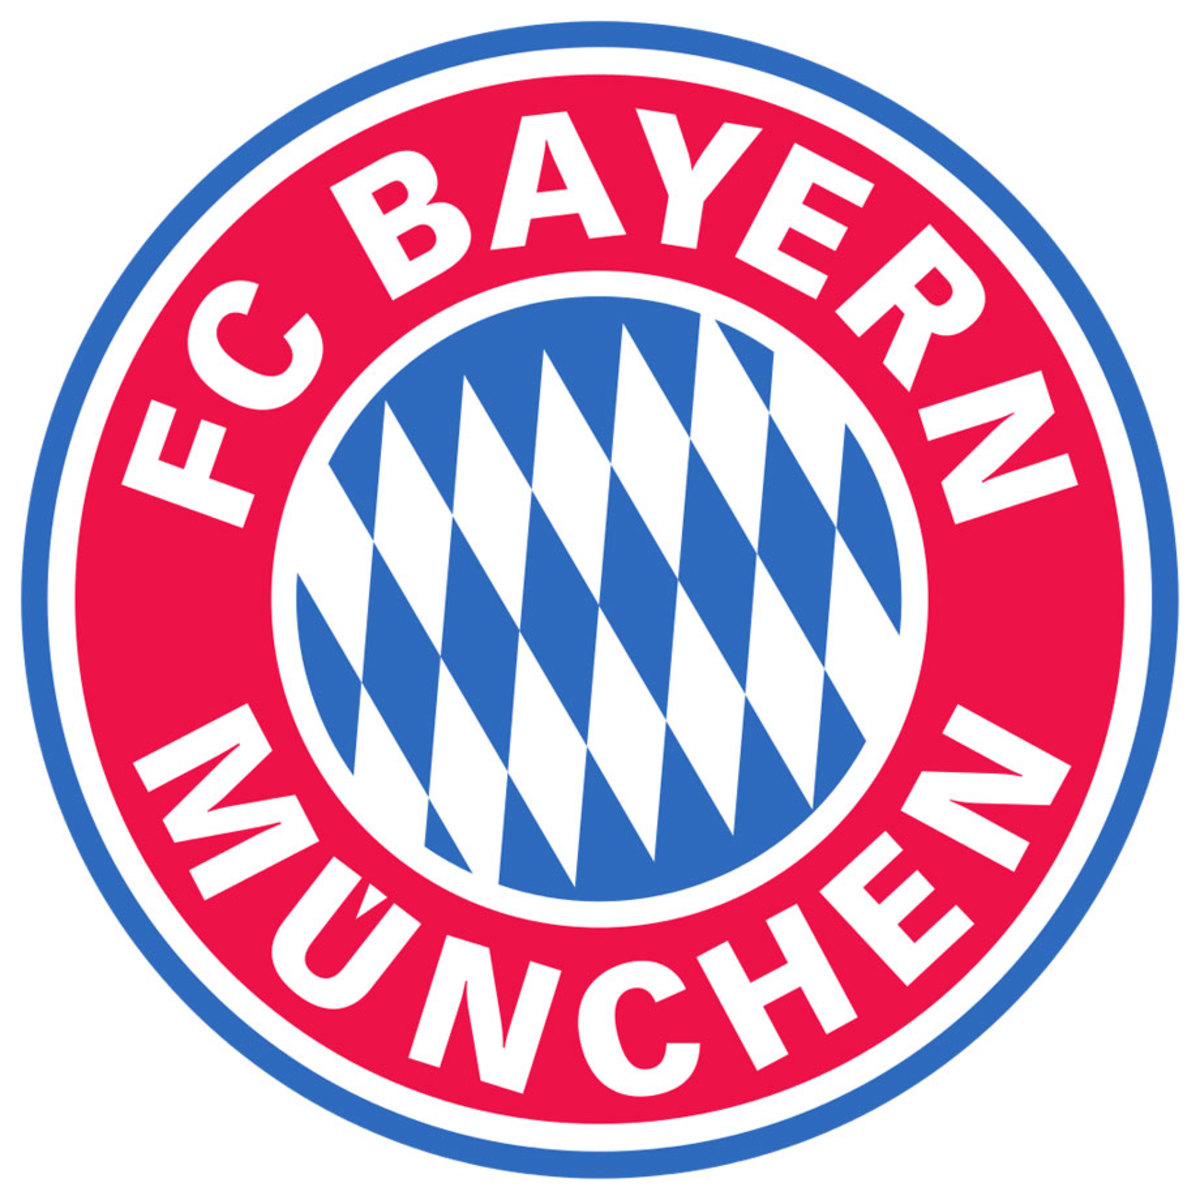 00-Bayern-Munich-logo.jpg